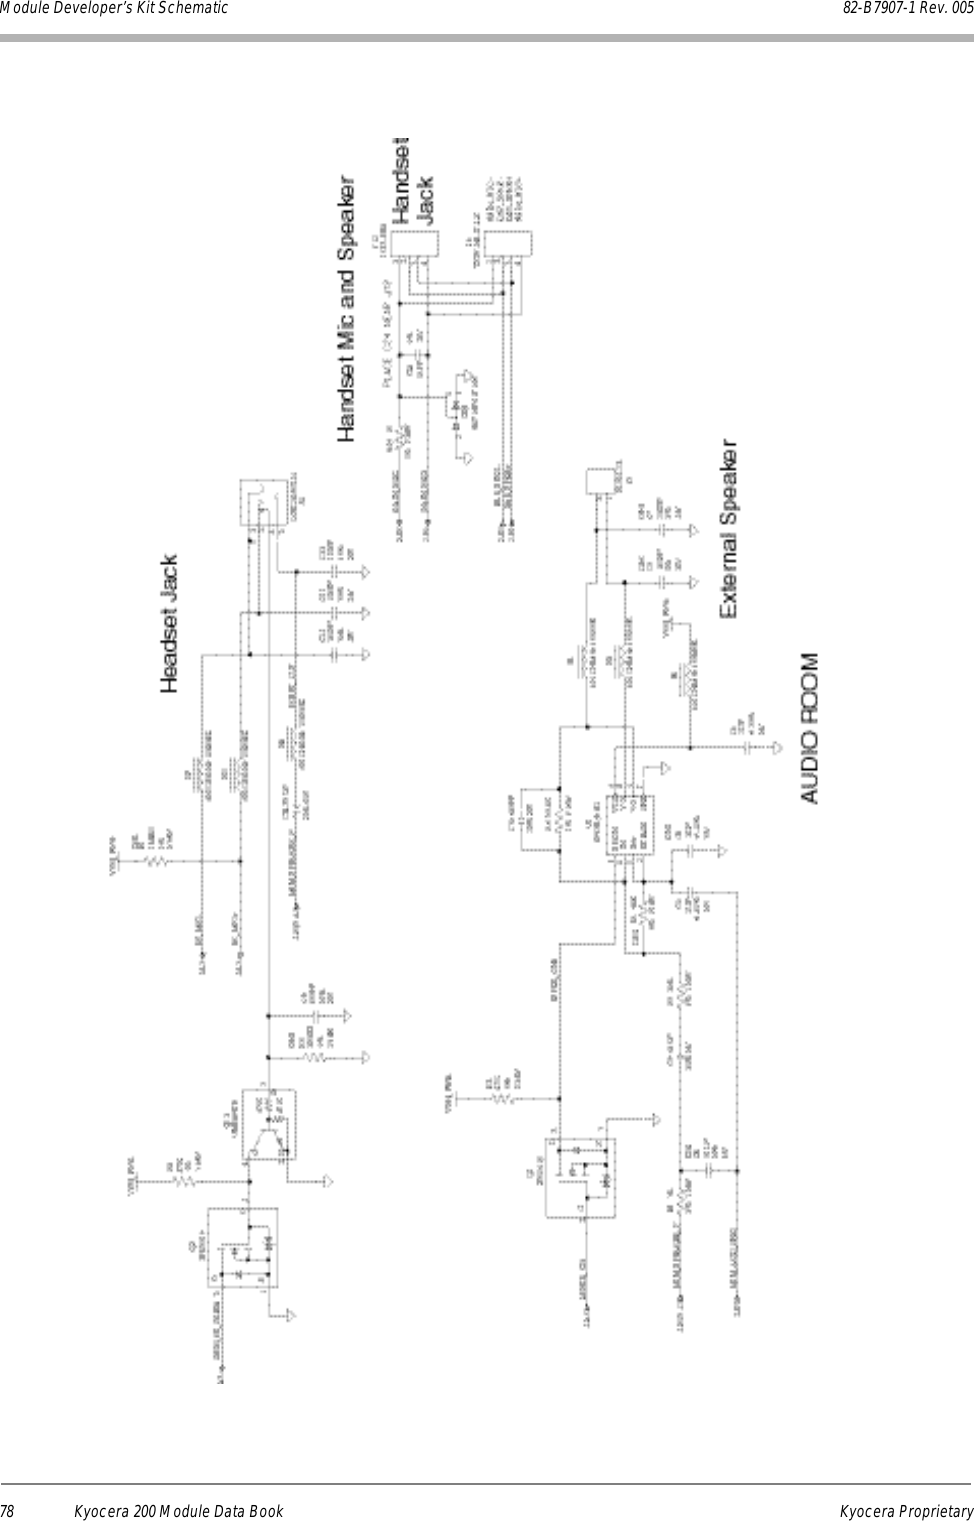 78 Kyocera 200 Module Data Book Kyocera ProprietaryModule Developer’s Kit Schematic 82-B7907-1 Rev. 005